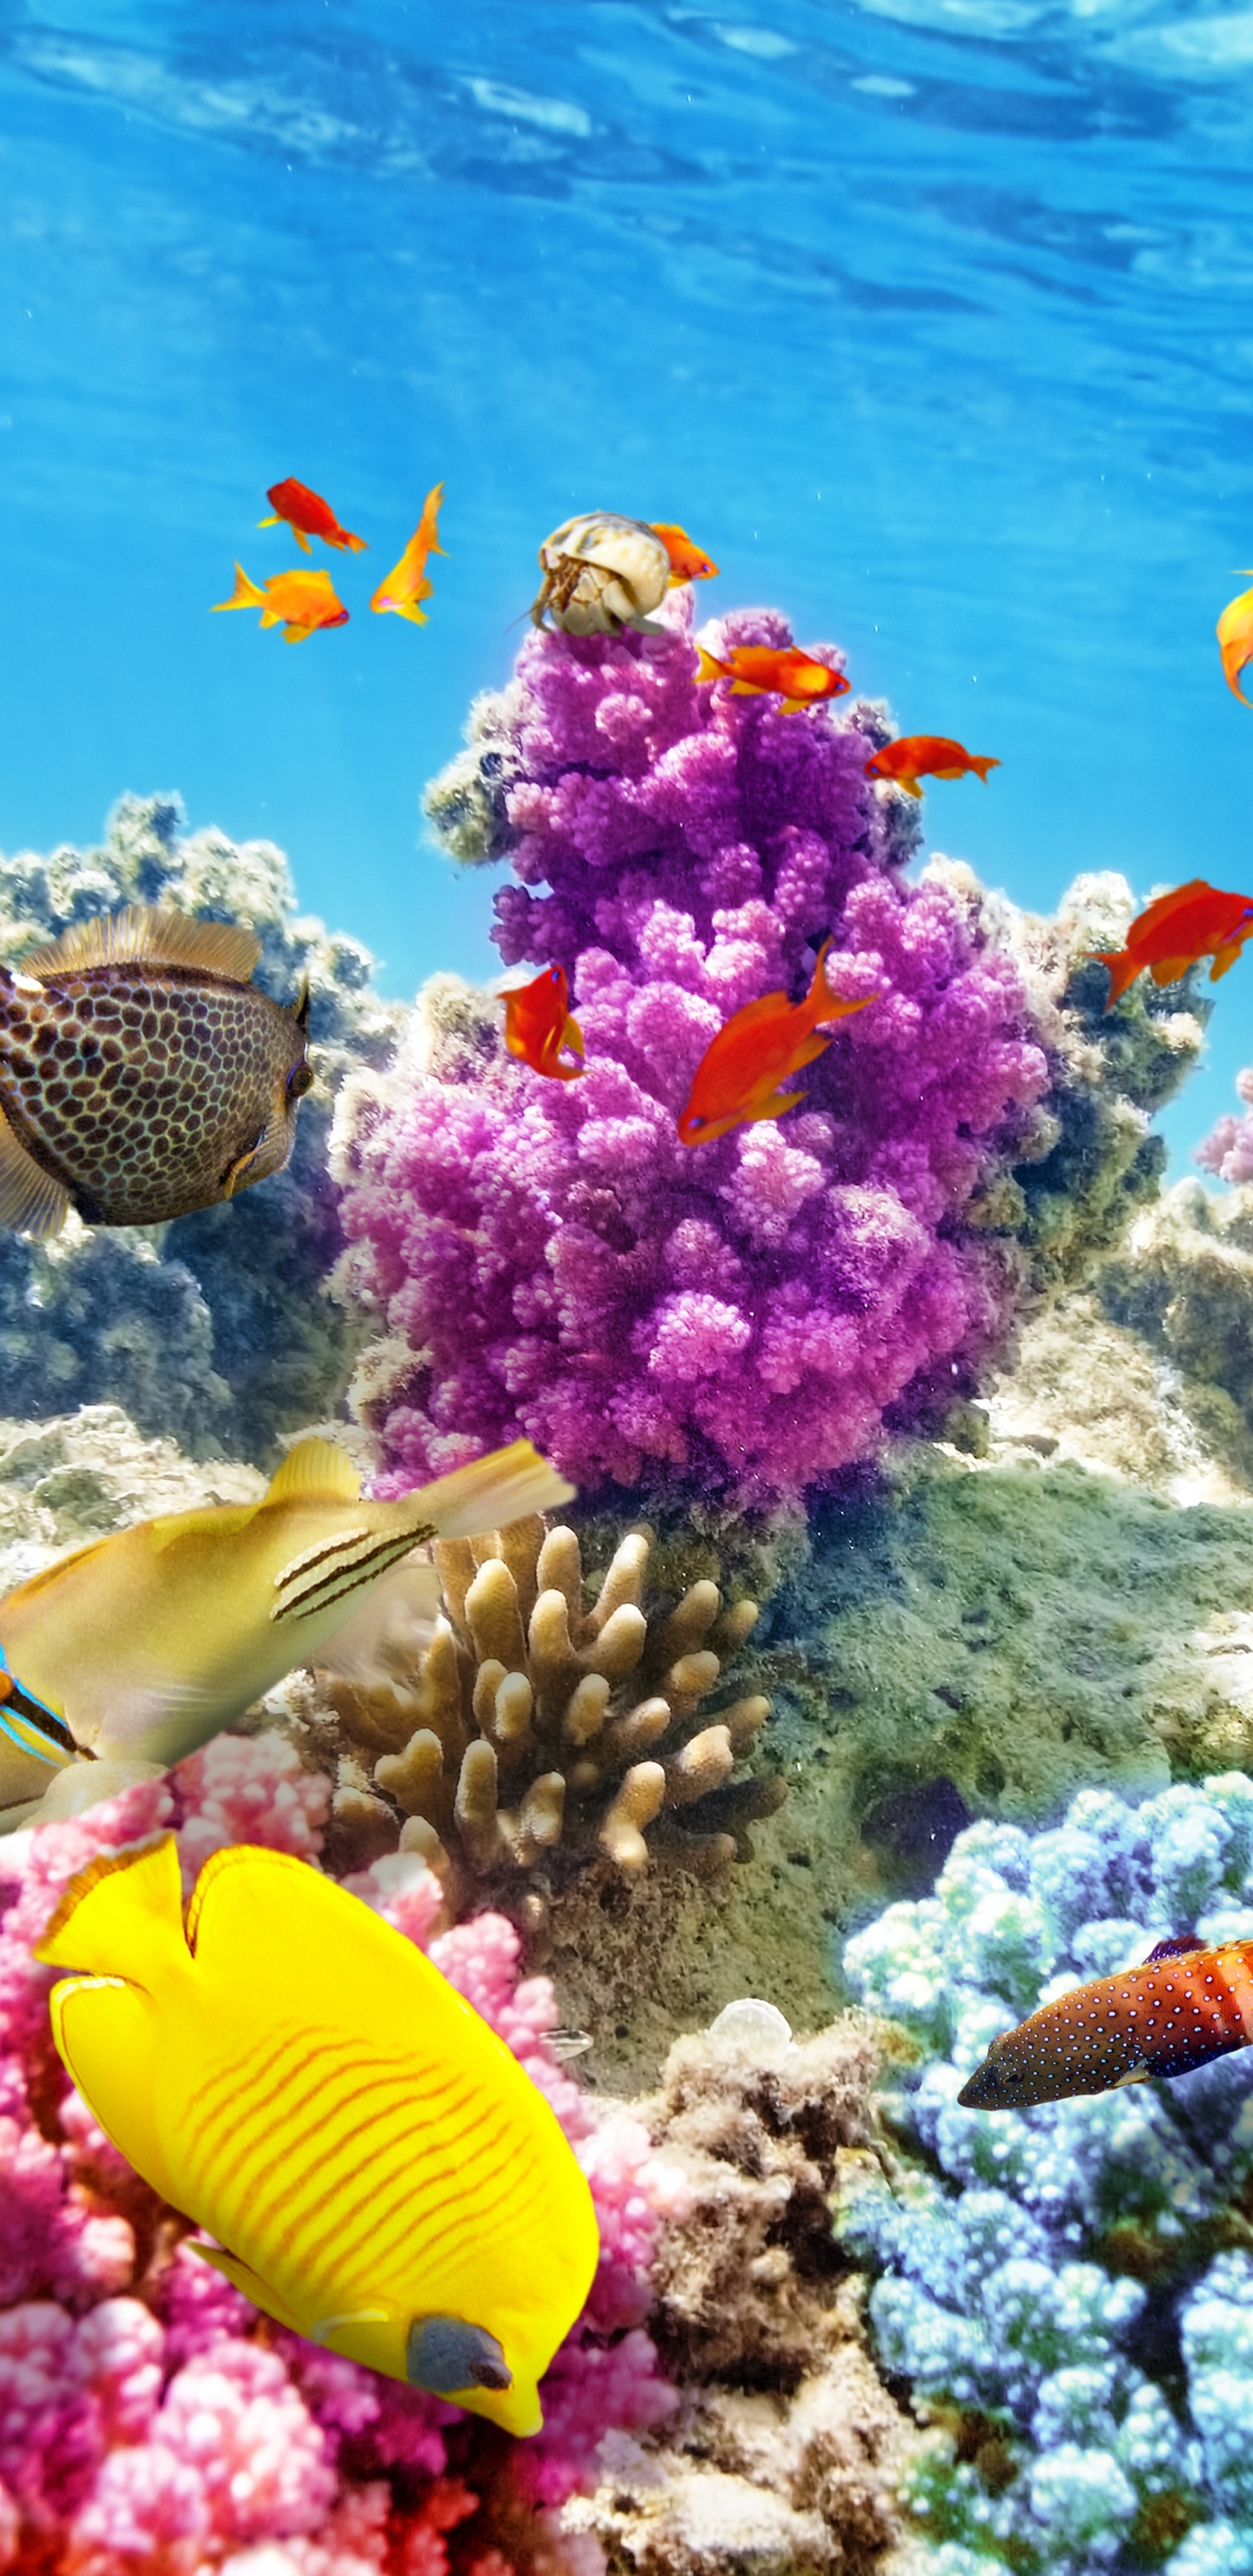 1148775 descargar imagen animales, pez, arrecife de coral, submarino, submarina, océano, peces: fondos de pantalla y protectores de pantalla gratis